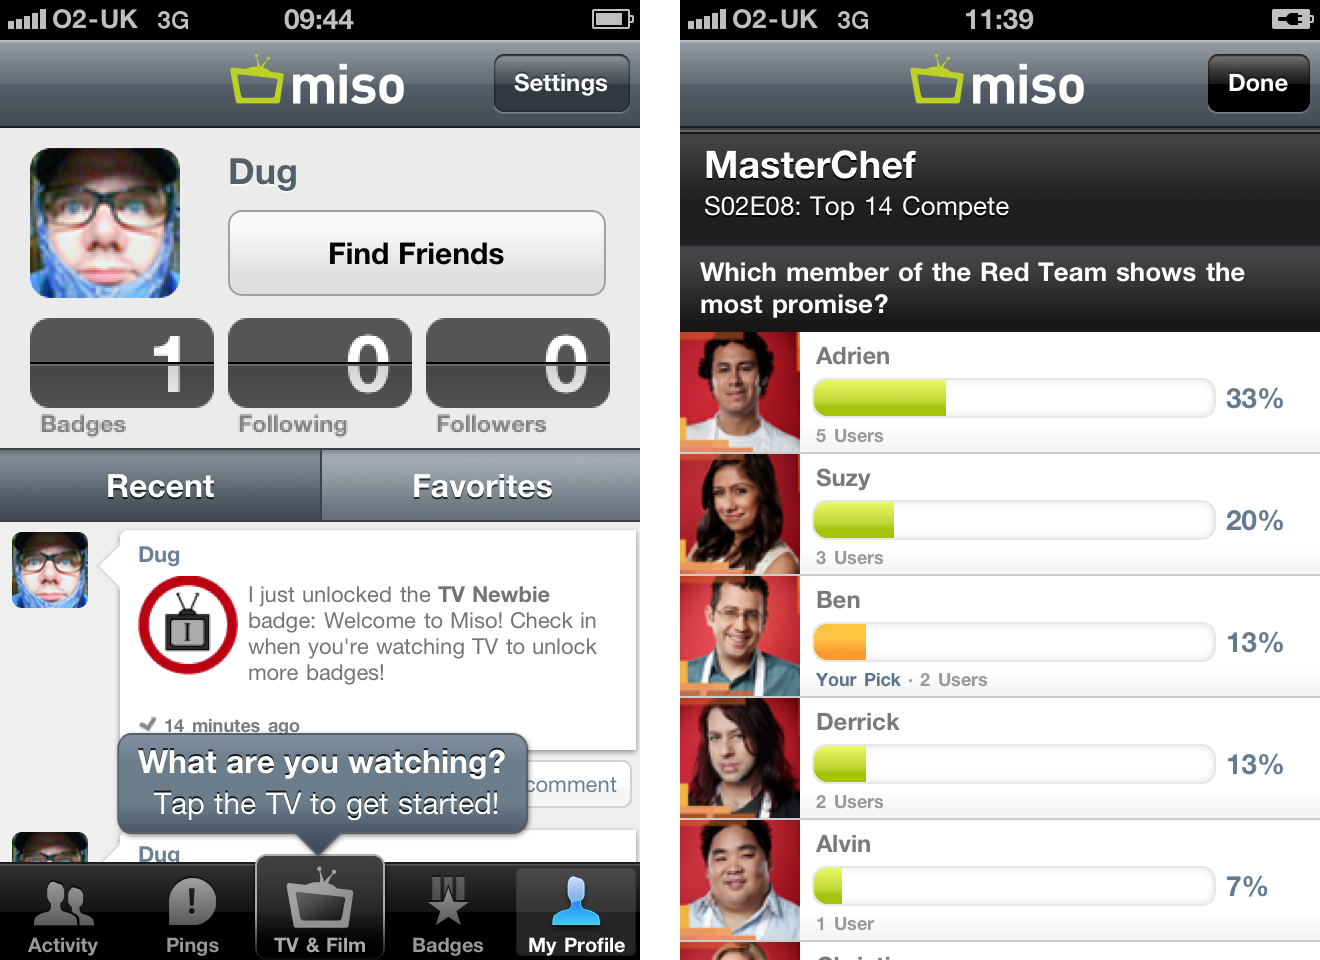 The Miso iPhone app